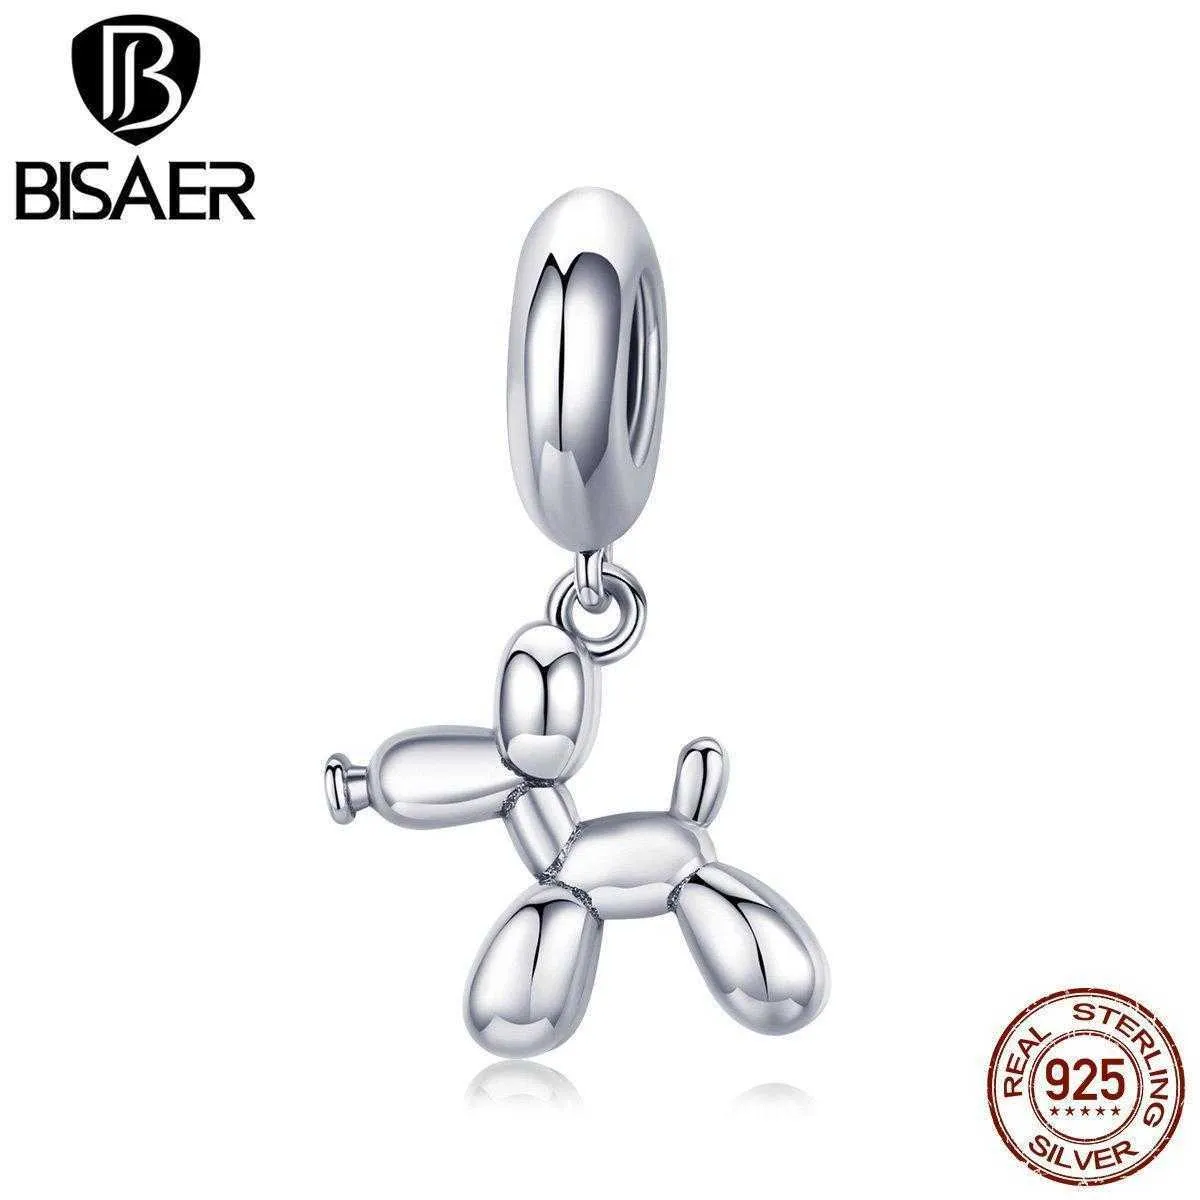 bisaer-925-sterling-silver-balloon-dog-tools.jpg